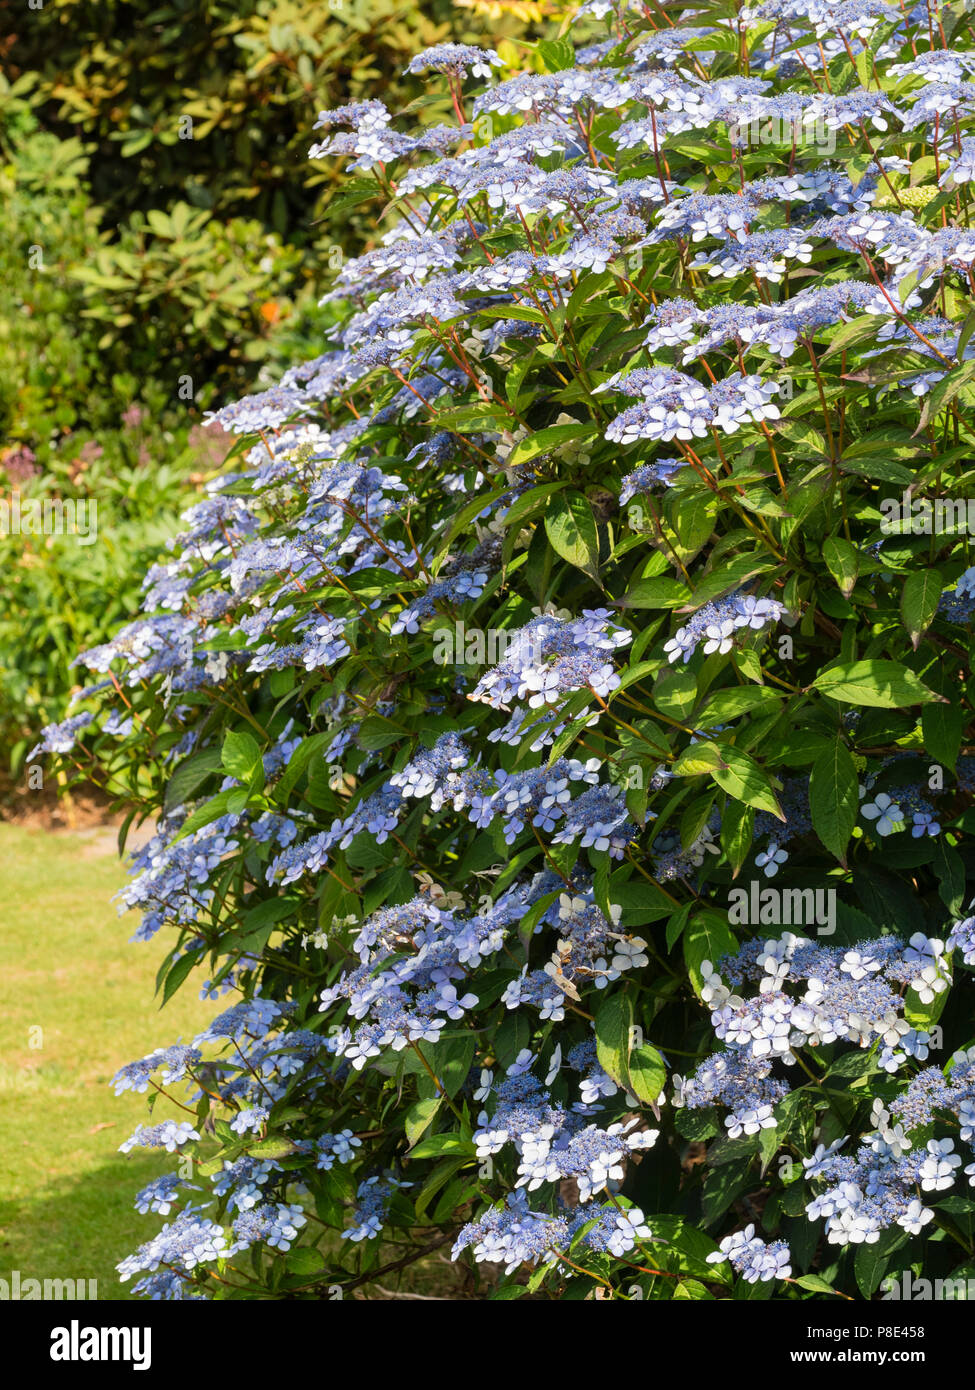 Arbusto de flores azules fotografías e imágenes de alta resolución - Alamy